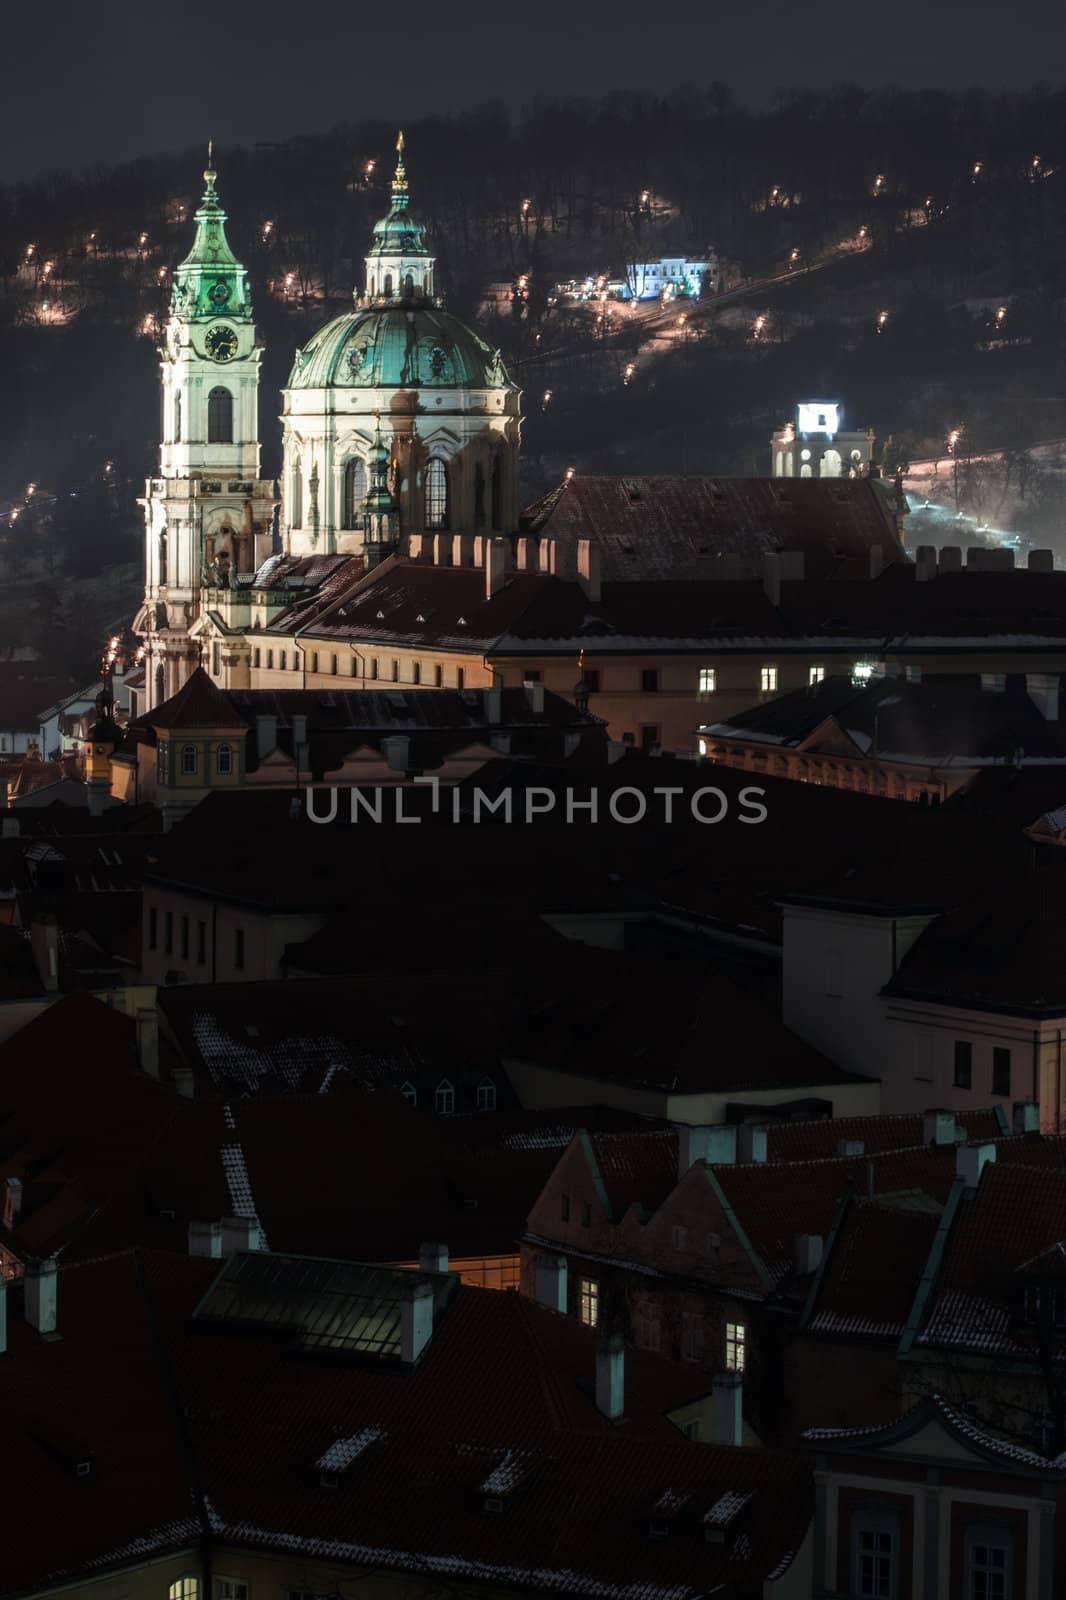 illuminated St. Nicholas church at night, Prague, Czech Republic